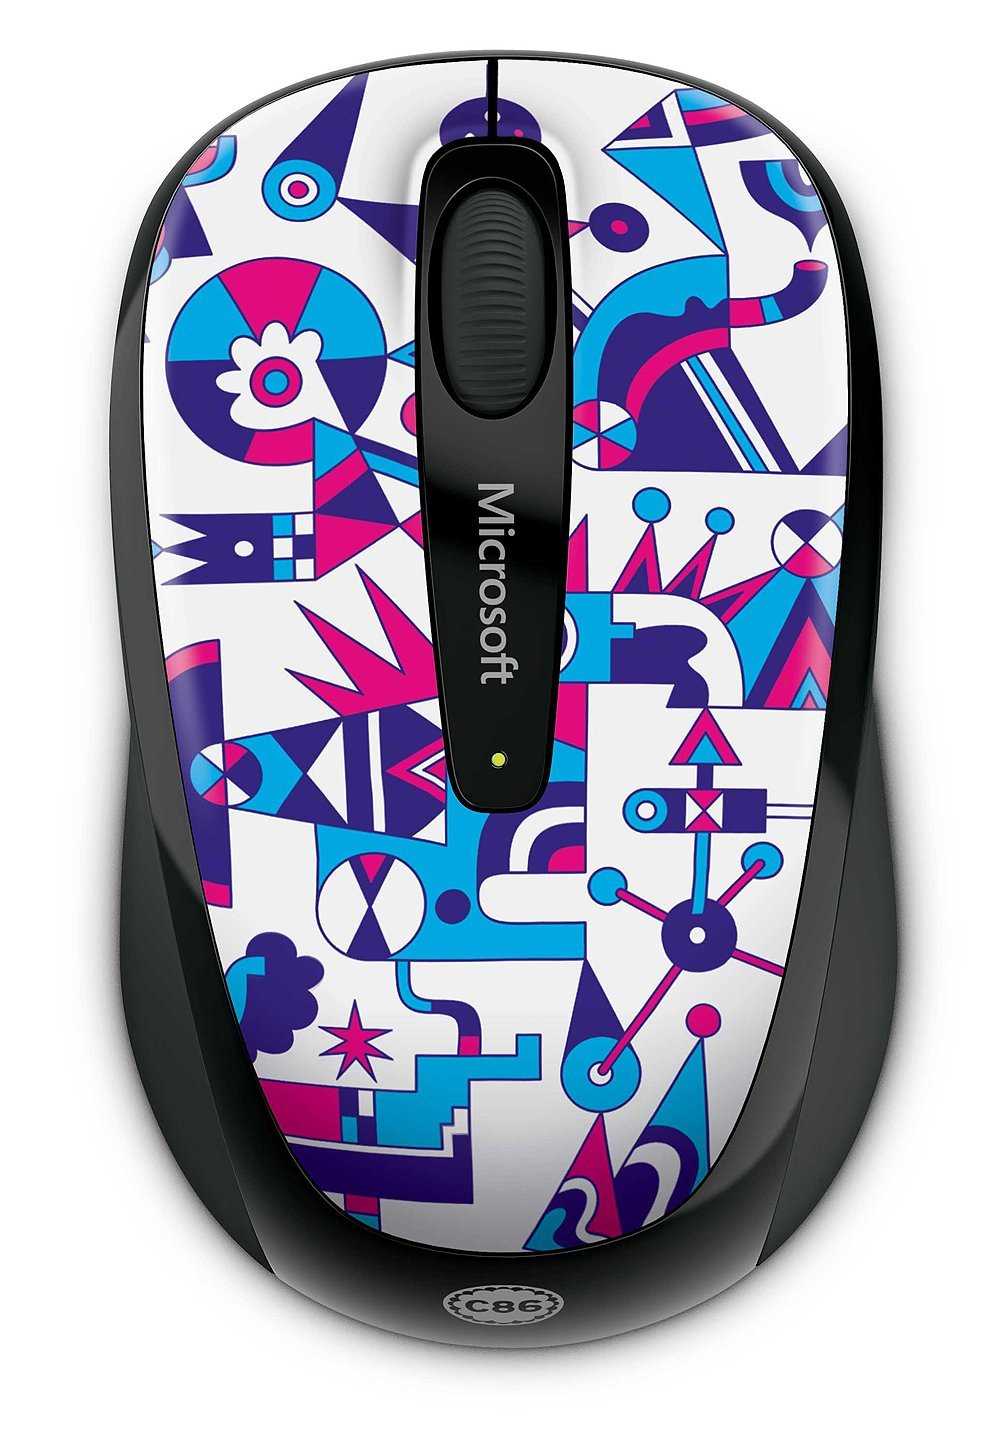 Microsoft wireless mobile mouse 3500 artist edition yellena james usb (цветная) - купить , скидки, цена, отзывы, обзор, характеристики - мыши